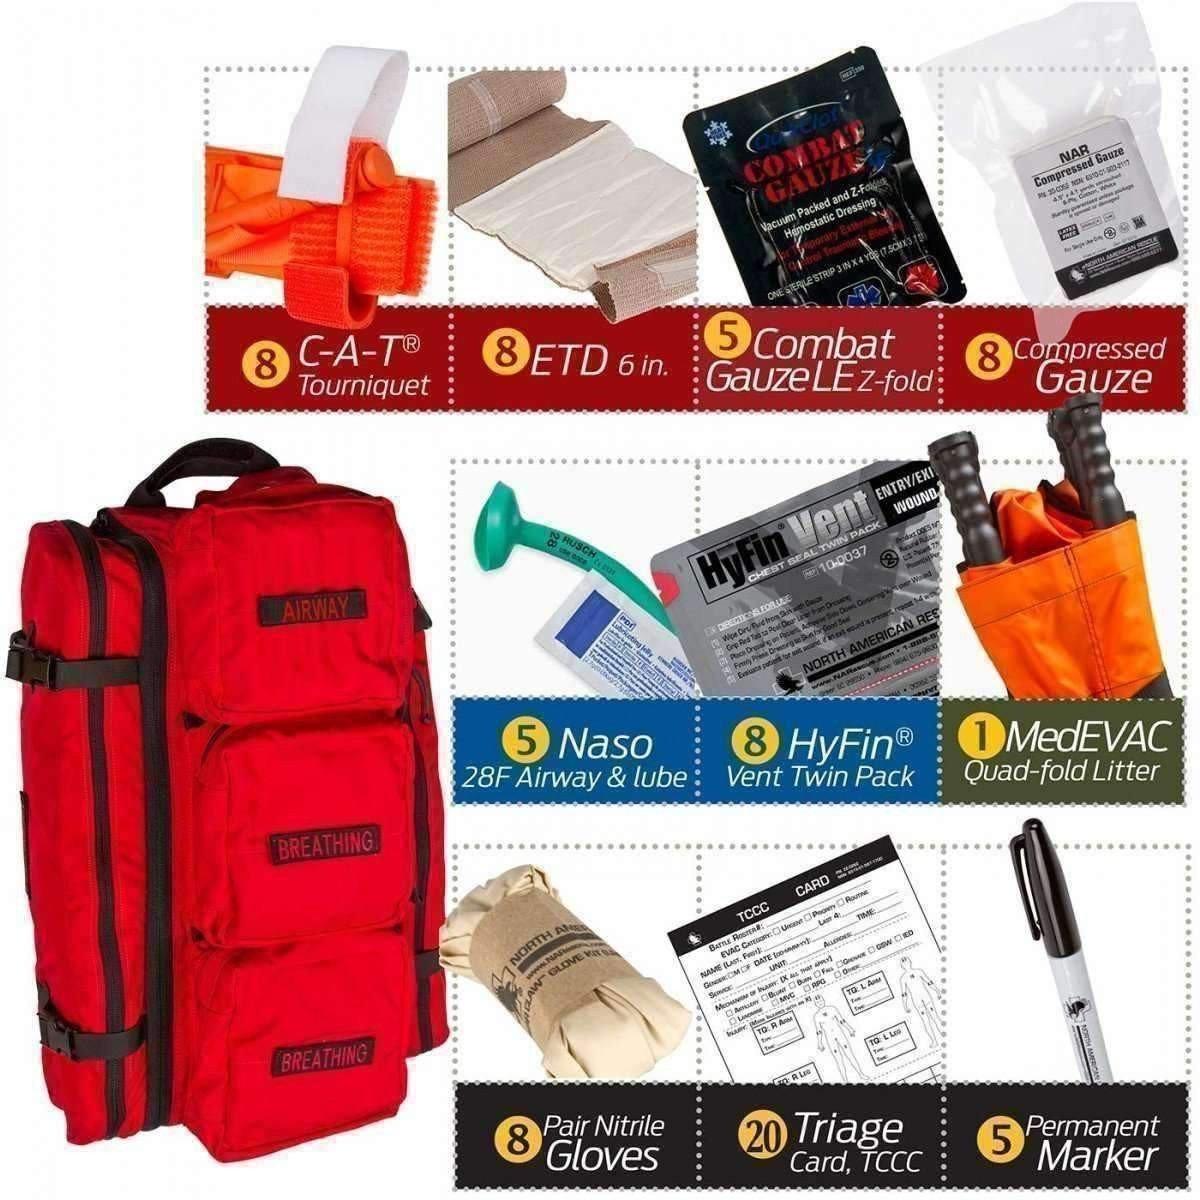 MCI-WALK (Mass Casualty Incident Warrior Aid & Litter Kit - Vendor